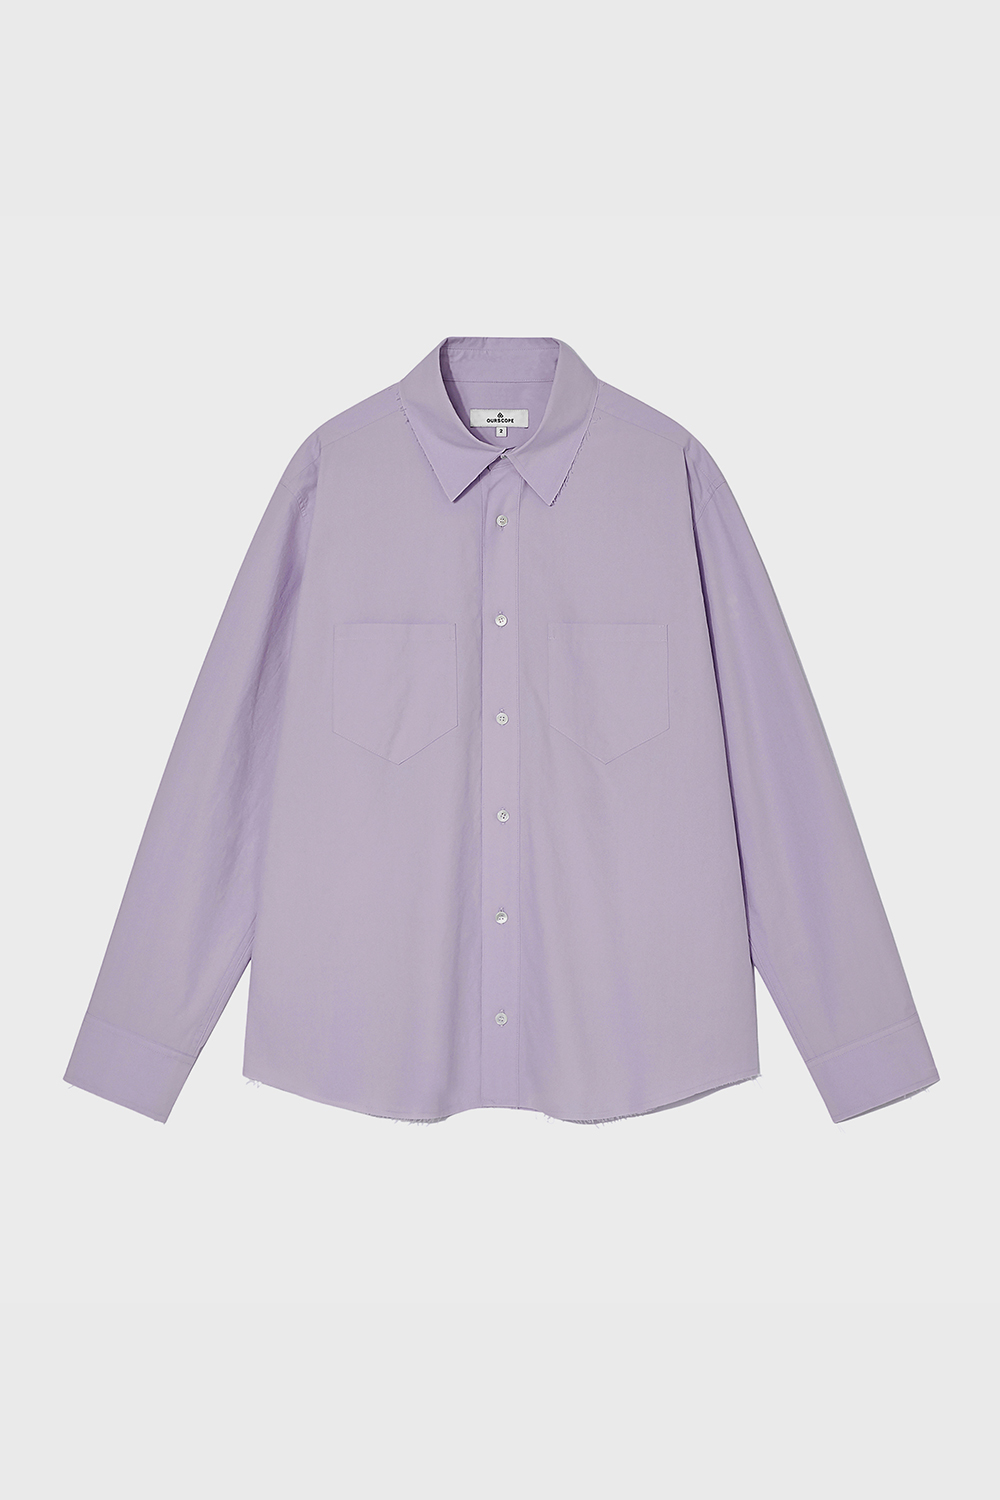 Pentagon Cut Off Shirts (Light Purple)